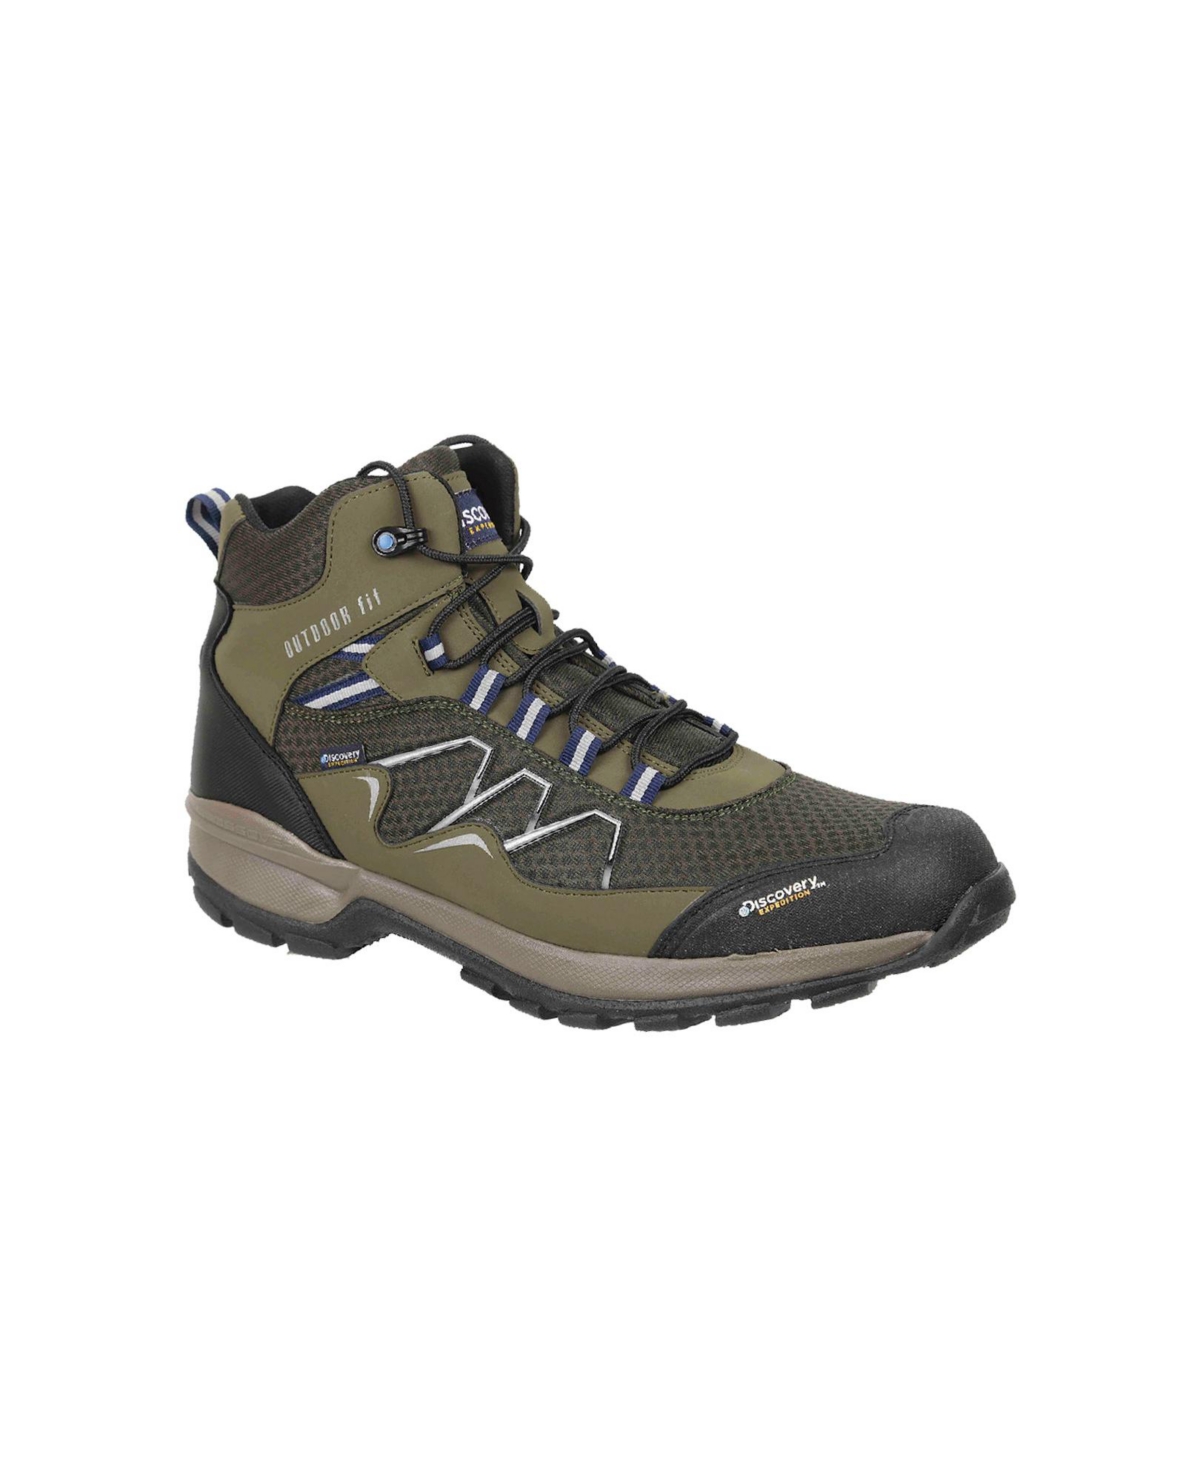 Men's Hiking Boot Rhon Green 2320 - Green